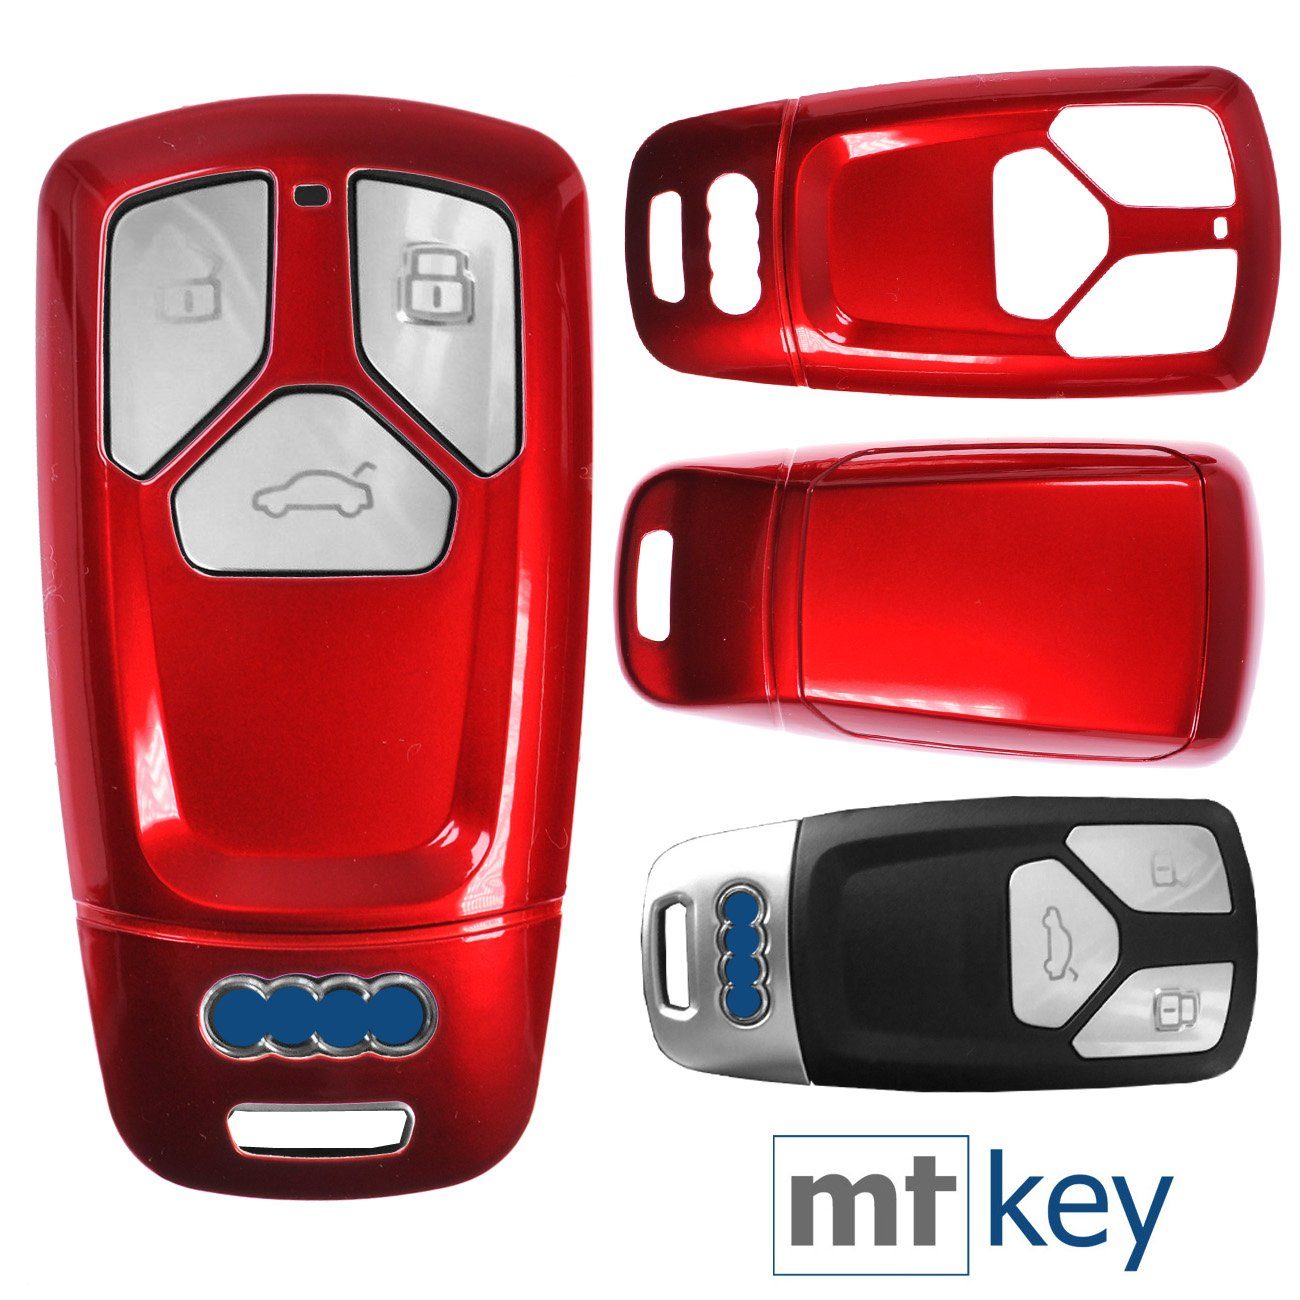 Q2 Autoschlüssel KEYLESS A7 Rot, für SMARTKEY Schlüsseltasche A5 TT Q8 Q5 Q7 A4 Metallic A8 mt-key A6 Audi Schutzhülle Hardcover